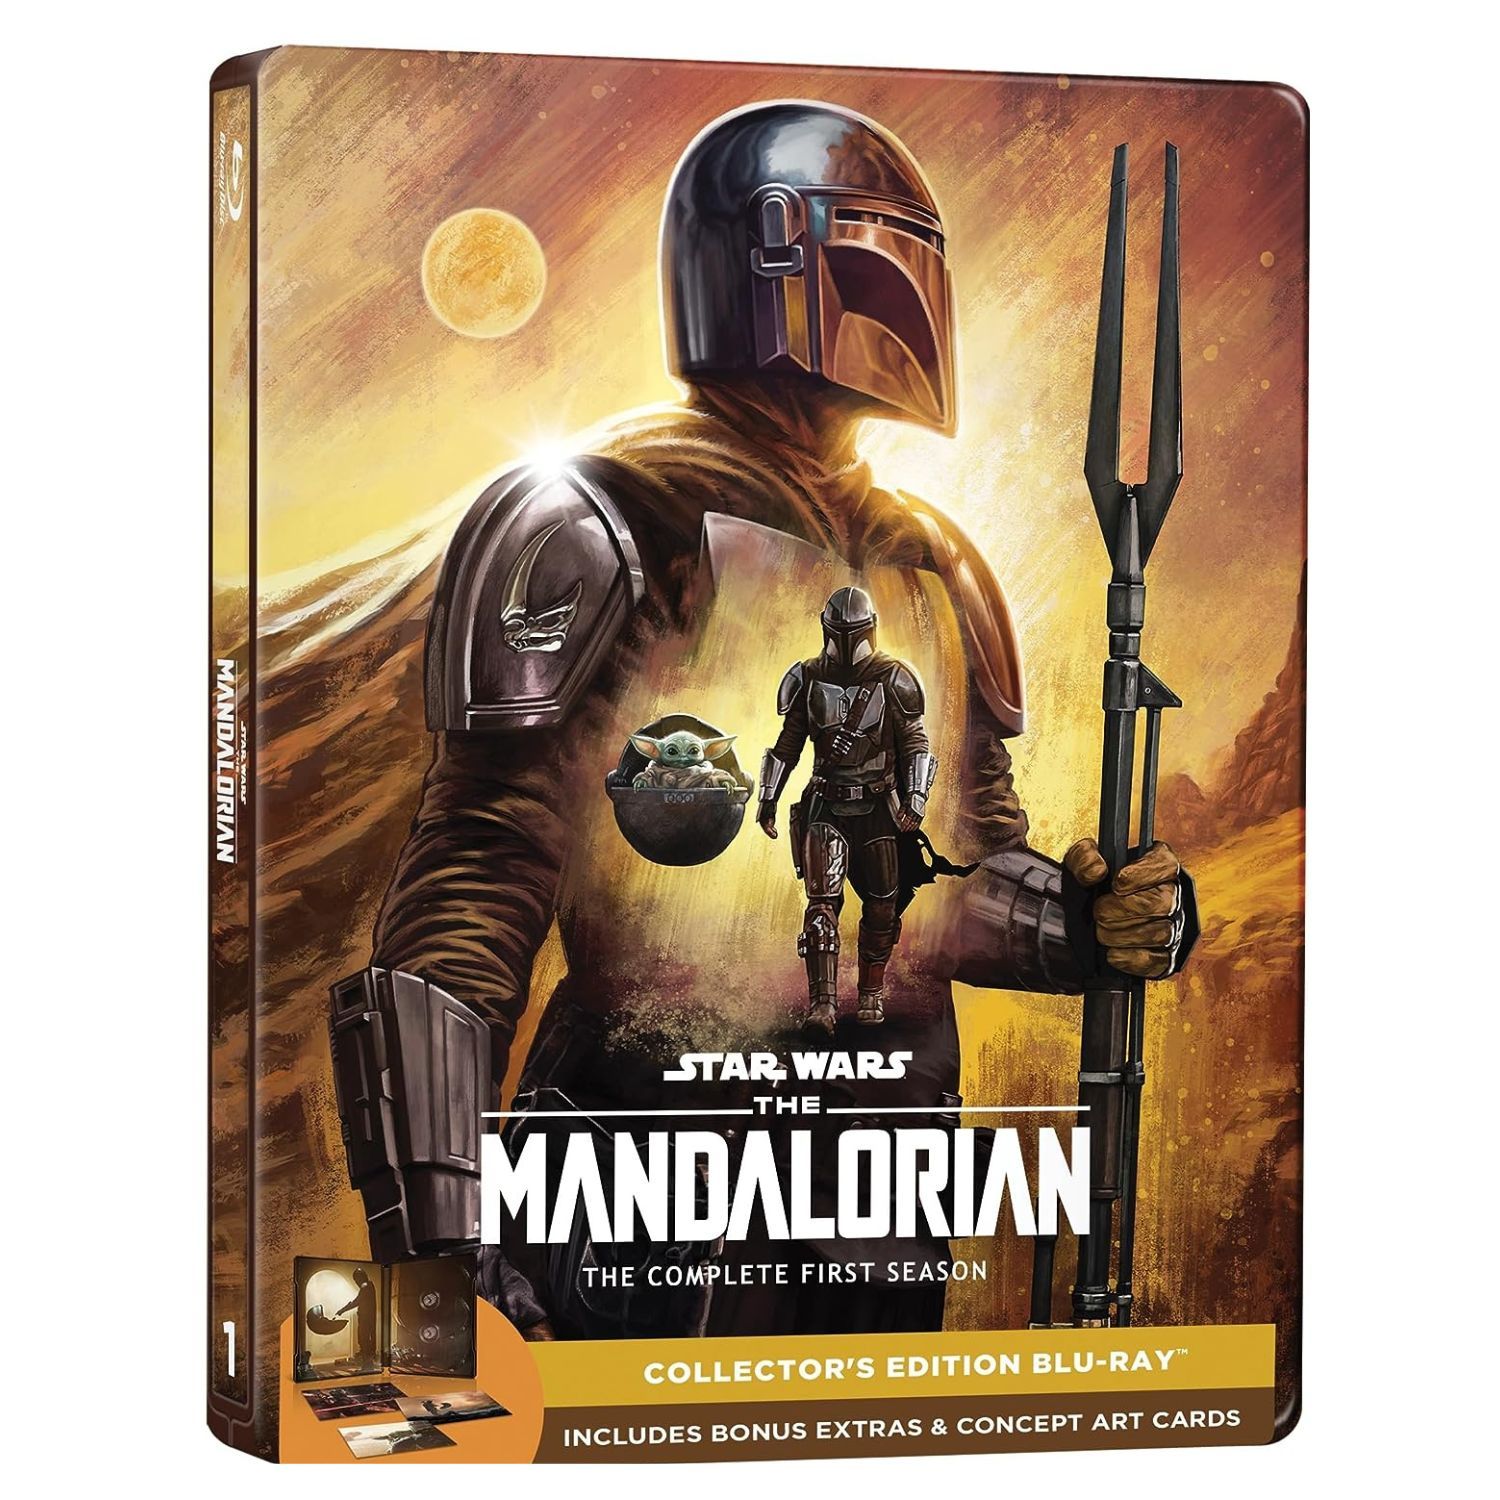 The Mandalorian Steelbook on blu-ray cover